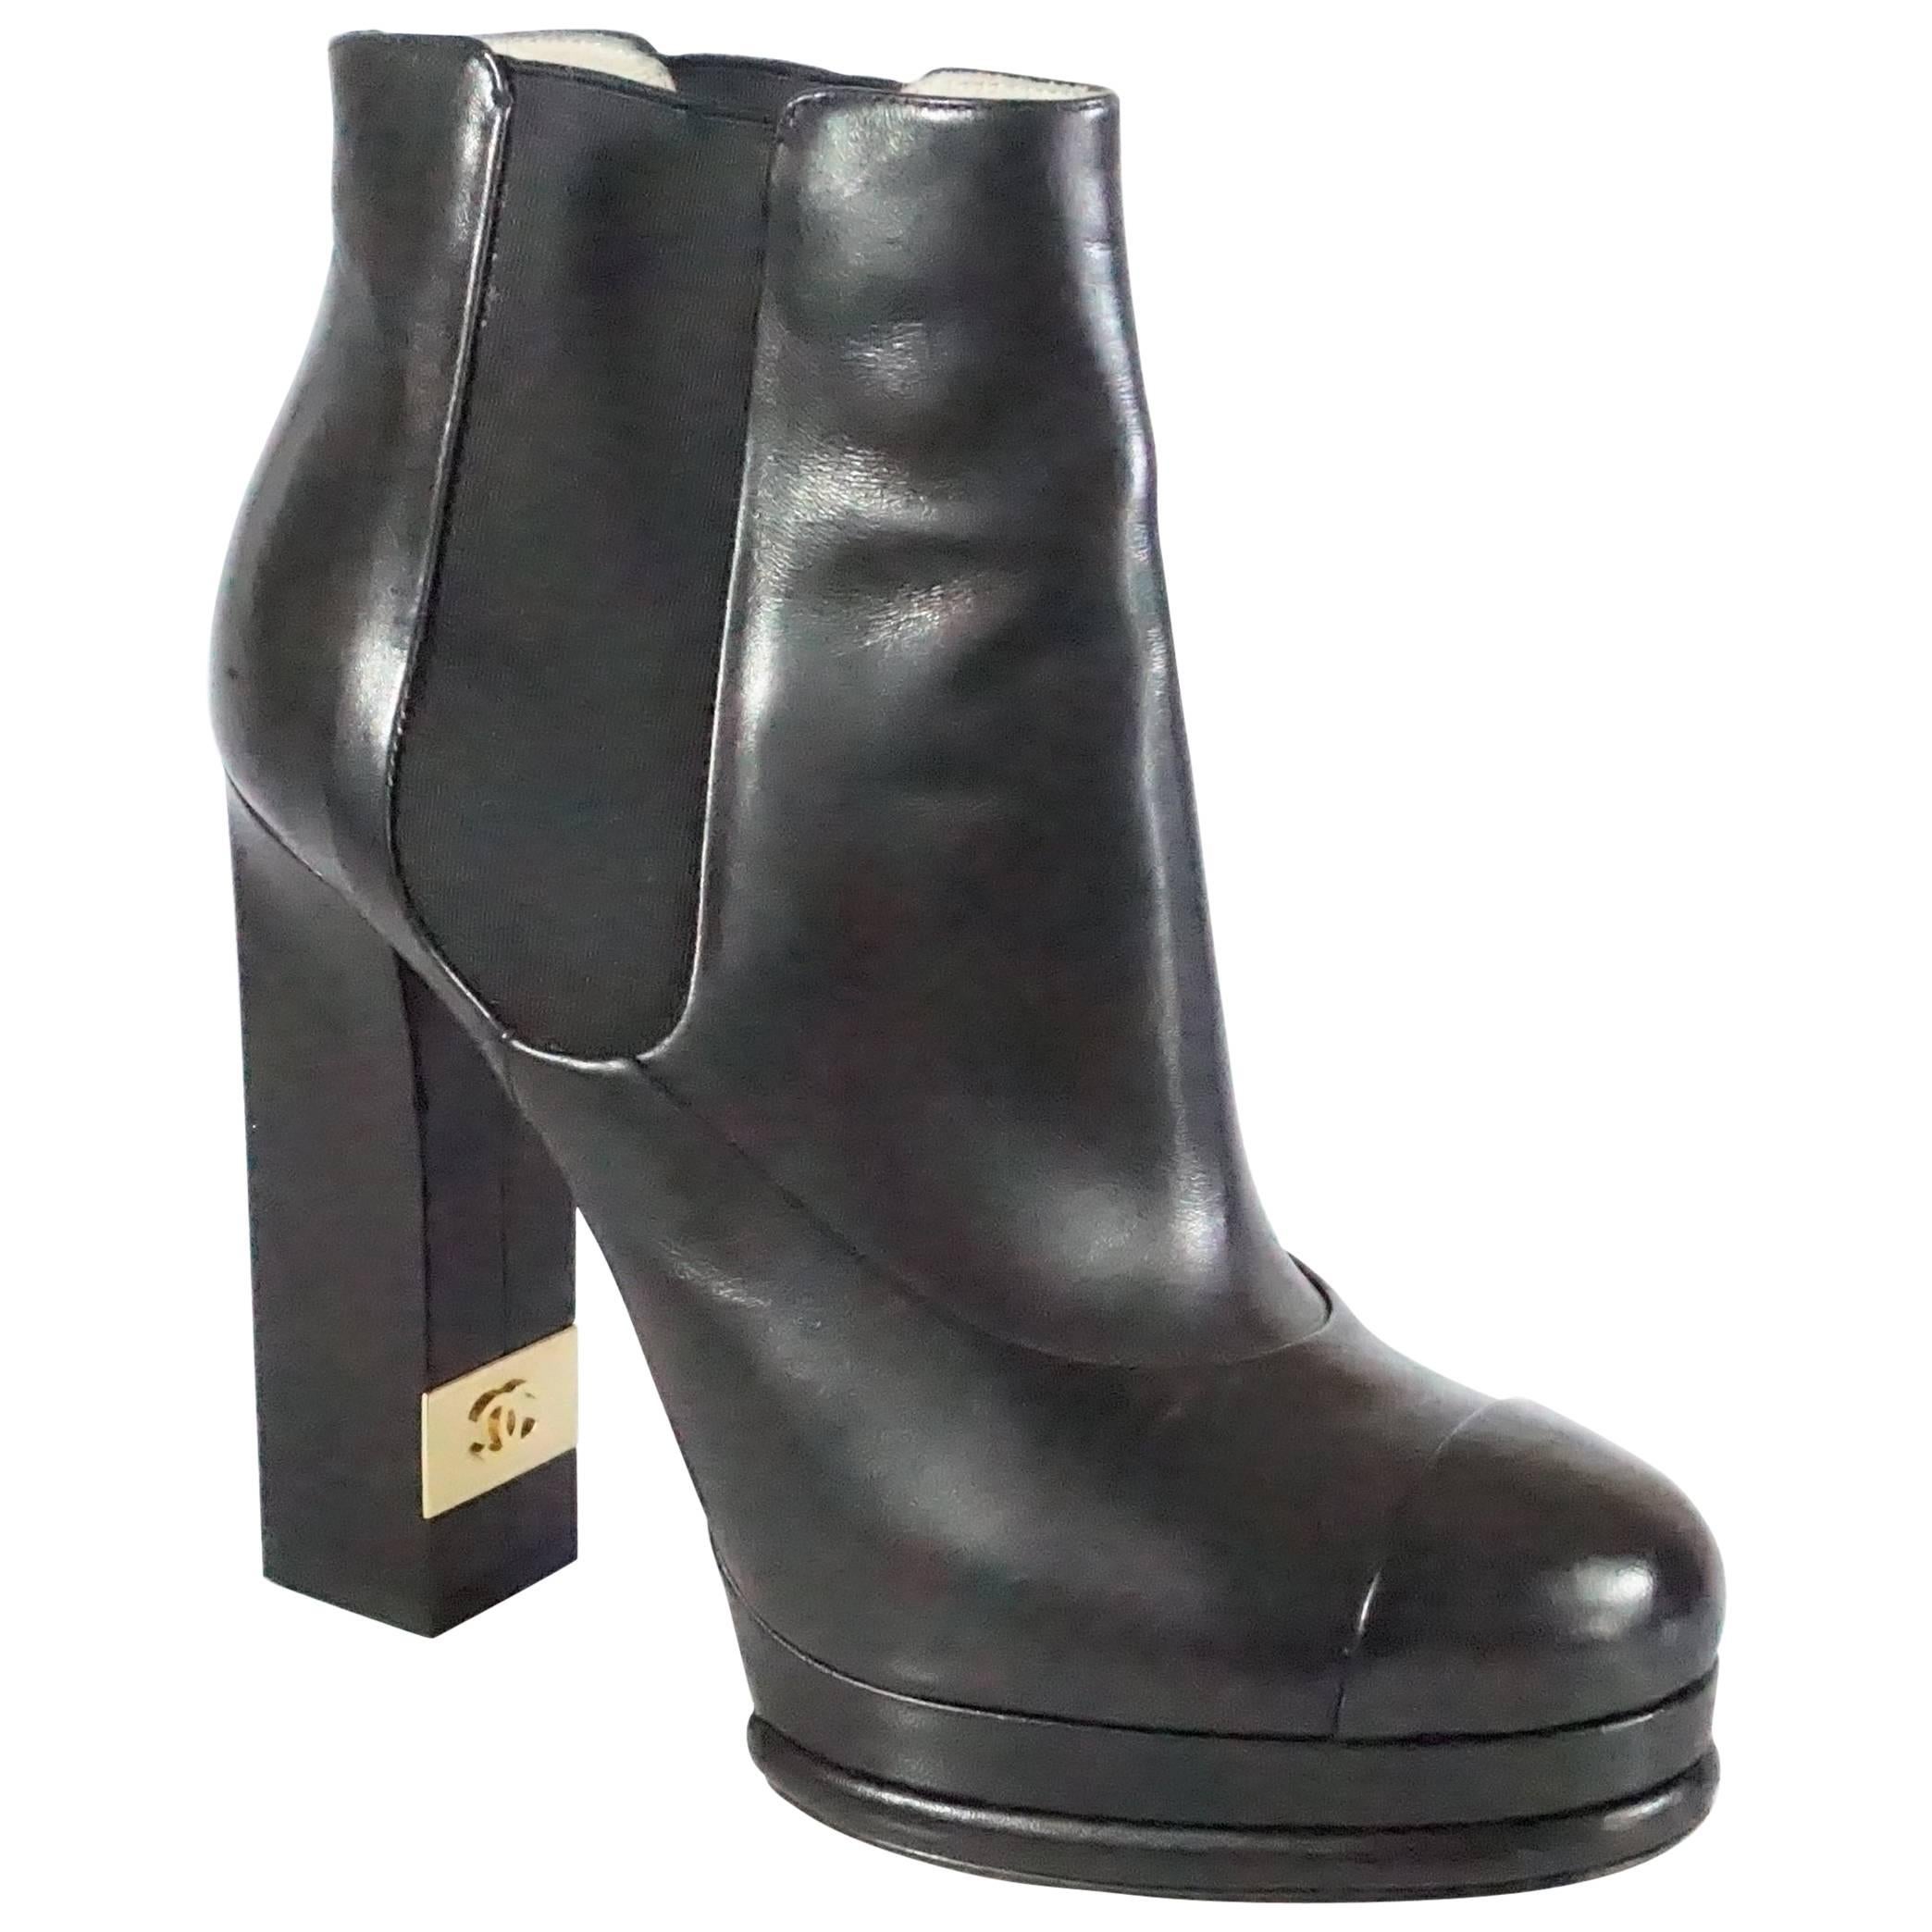 Chanel Black Leather Platform Ankle Boots - 37.5